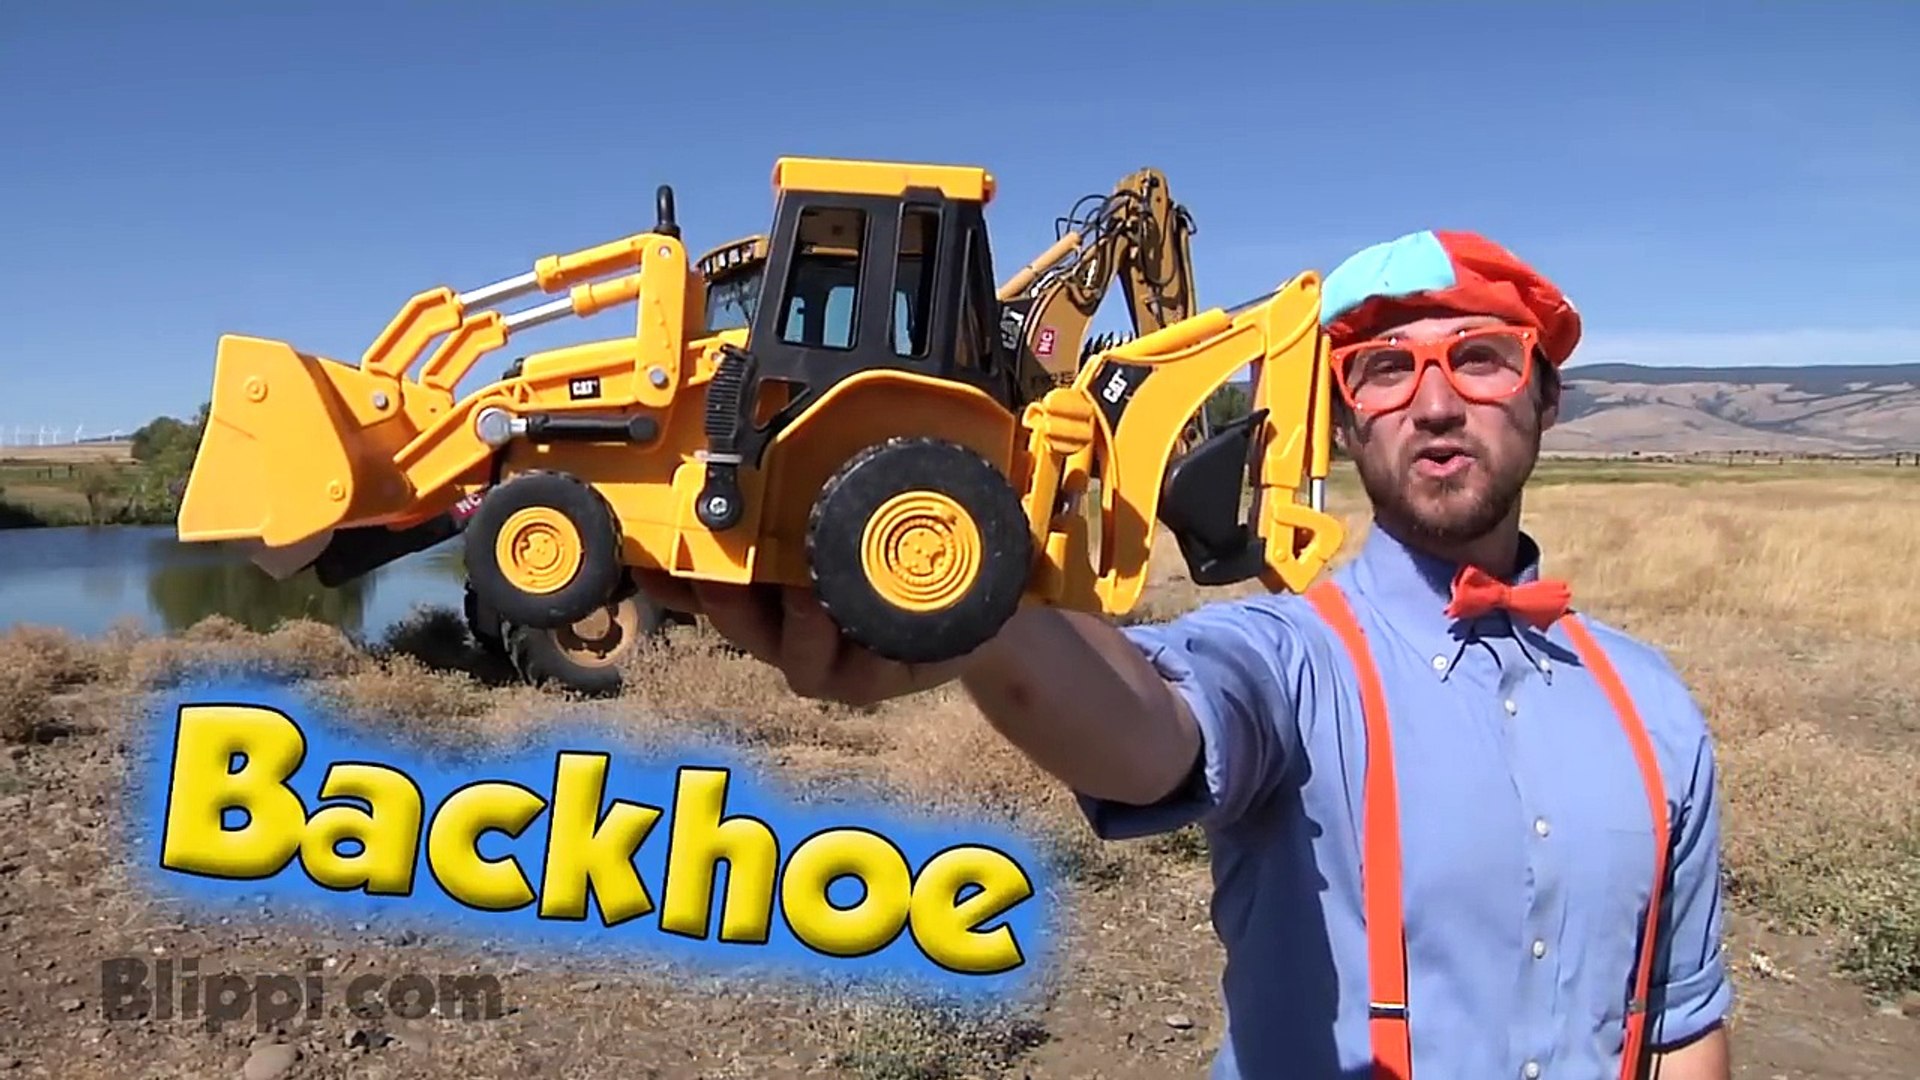 Backhoe Excavator for Kids - Explore A Backhoe - video Dailymotion